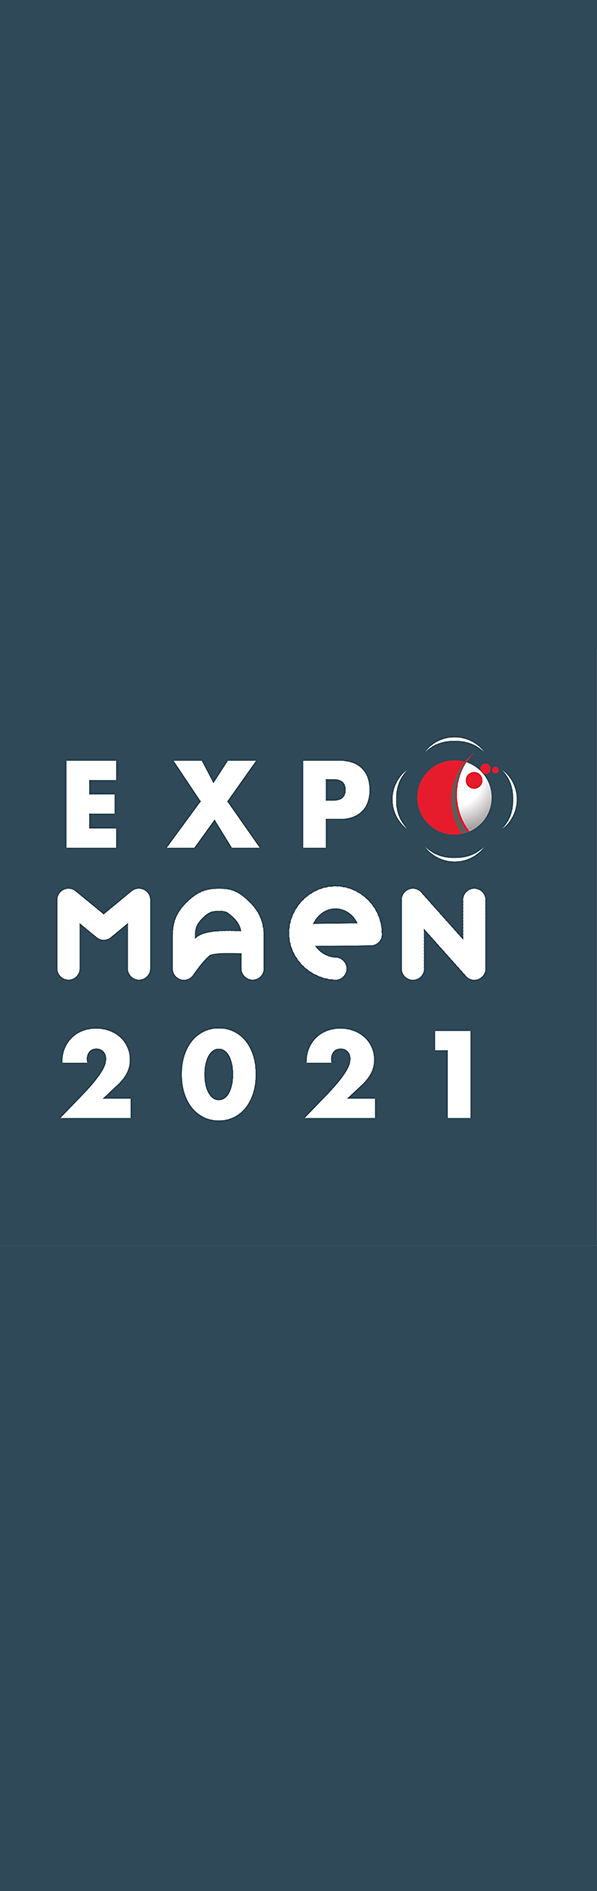 Expo2021